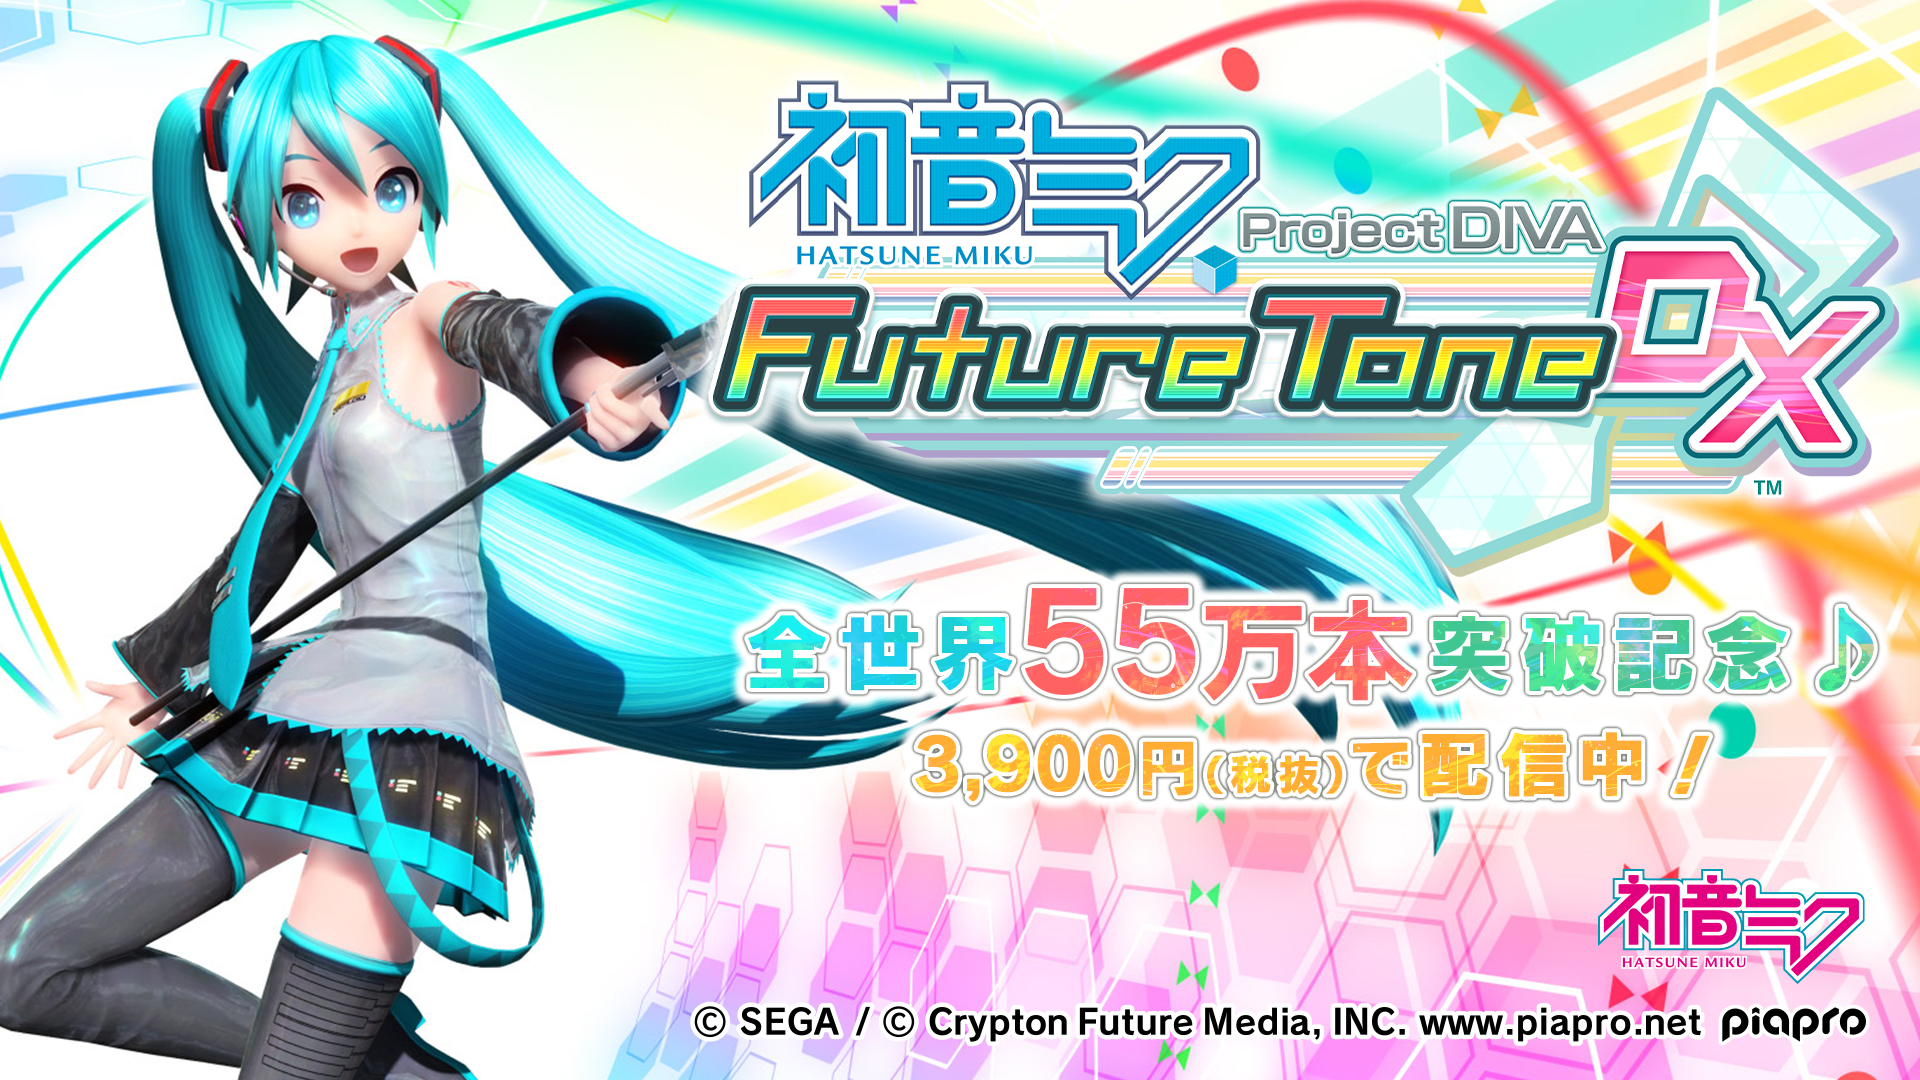 PS4「初音ミク Project DIVA Future Tone / DX」が全世界累計55万本を突破！  本日よりダウンロード版が税別3,900円に価格改定 - GAME Watch